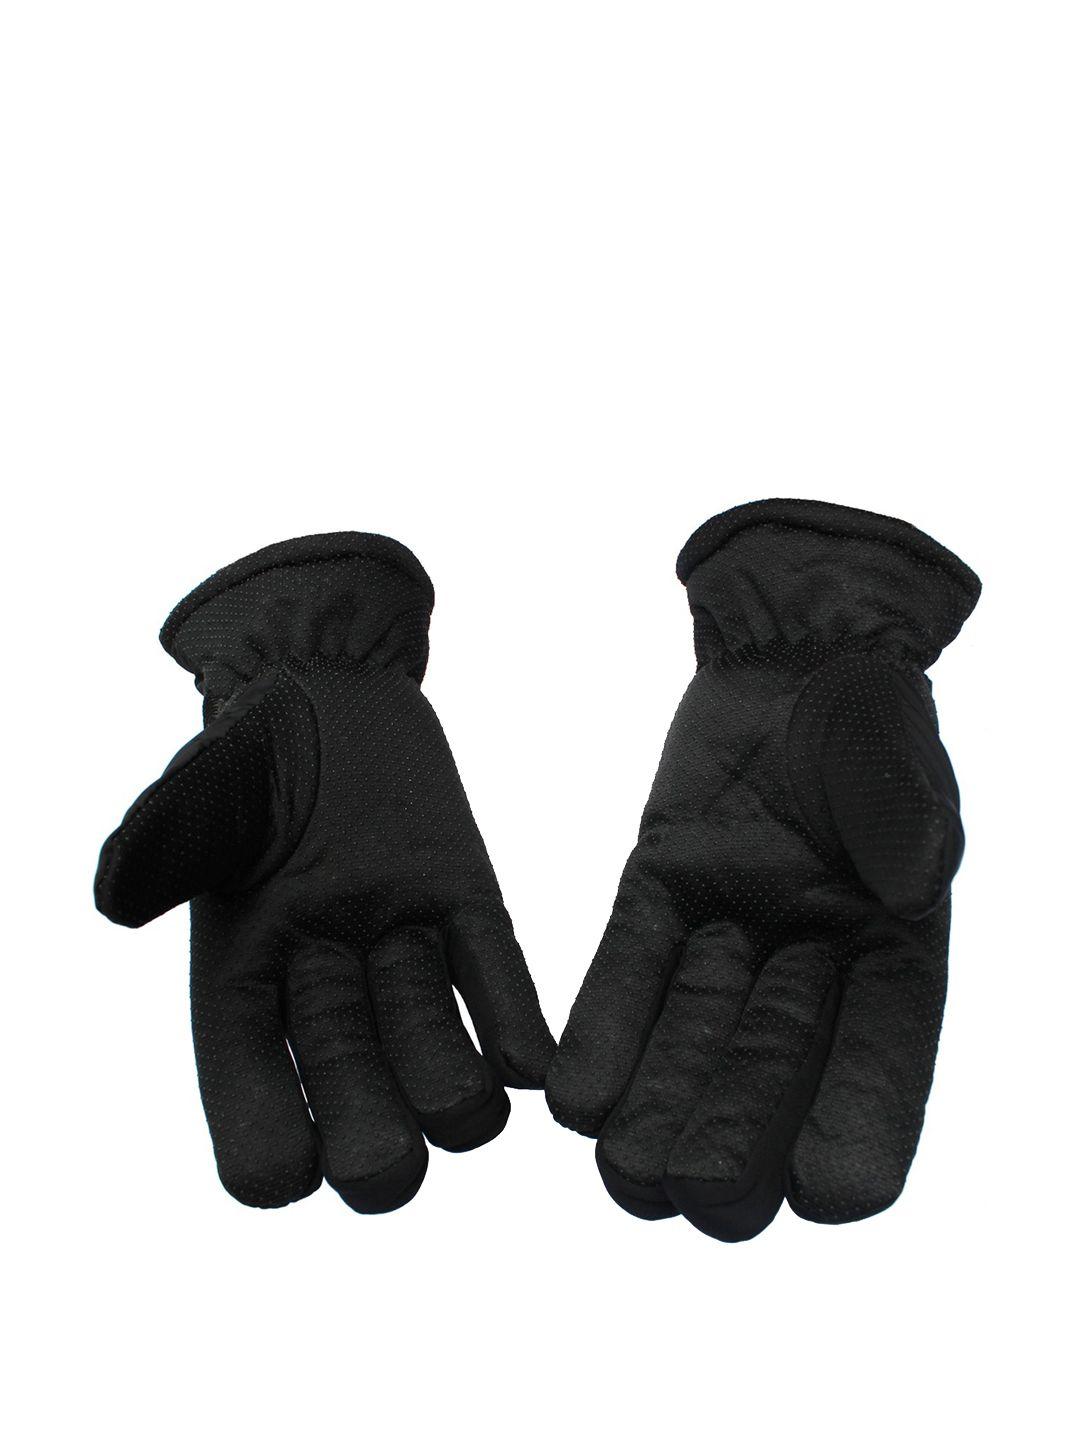 alexvyan men warm protective riding gloves